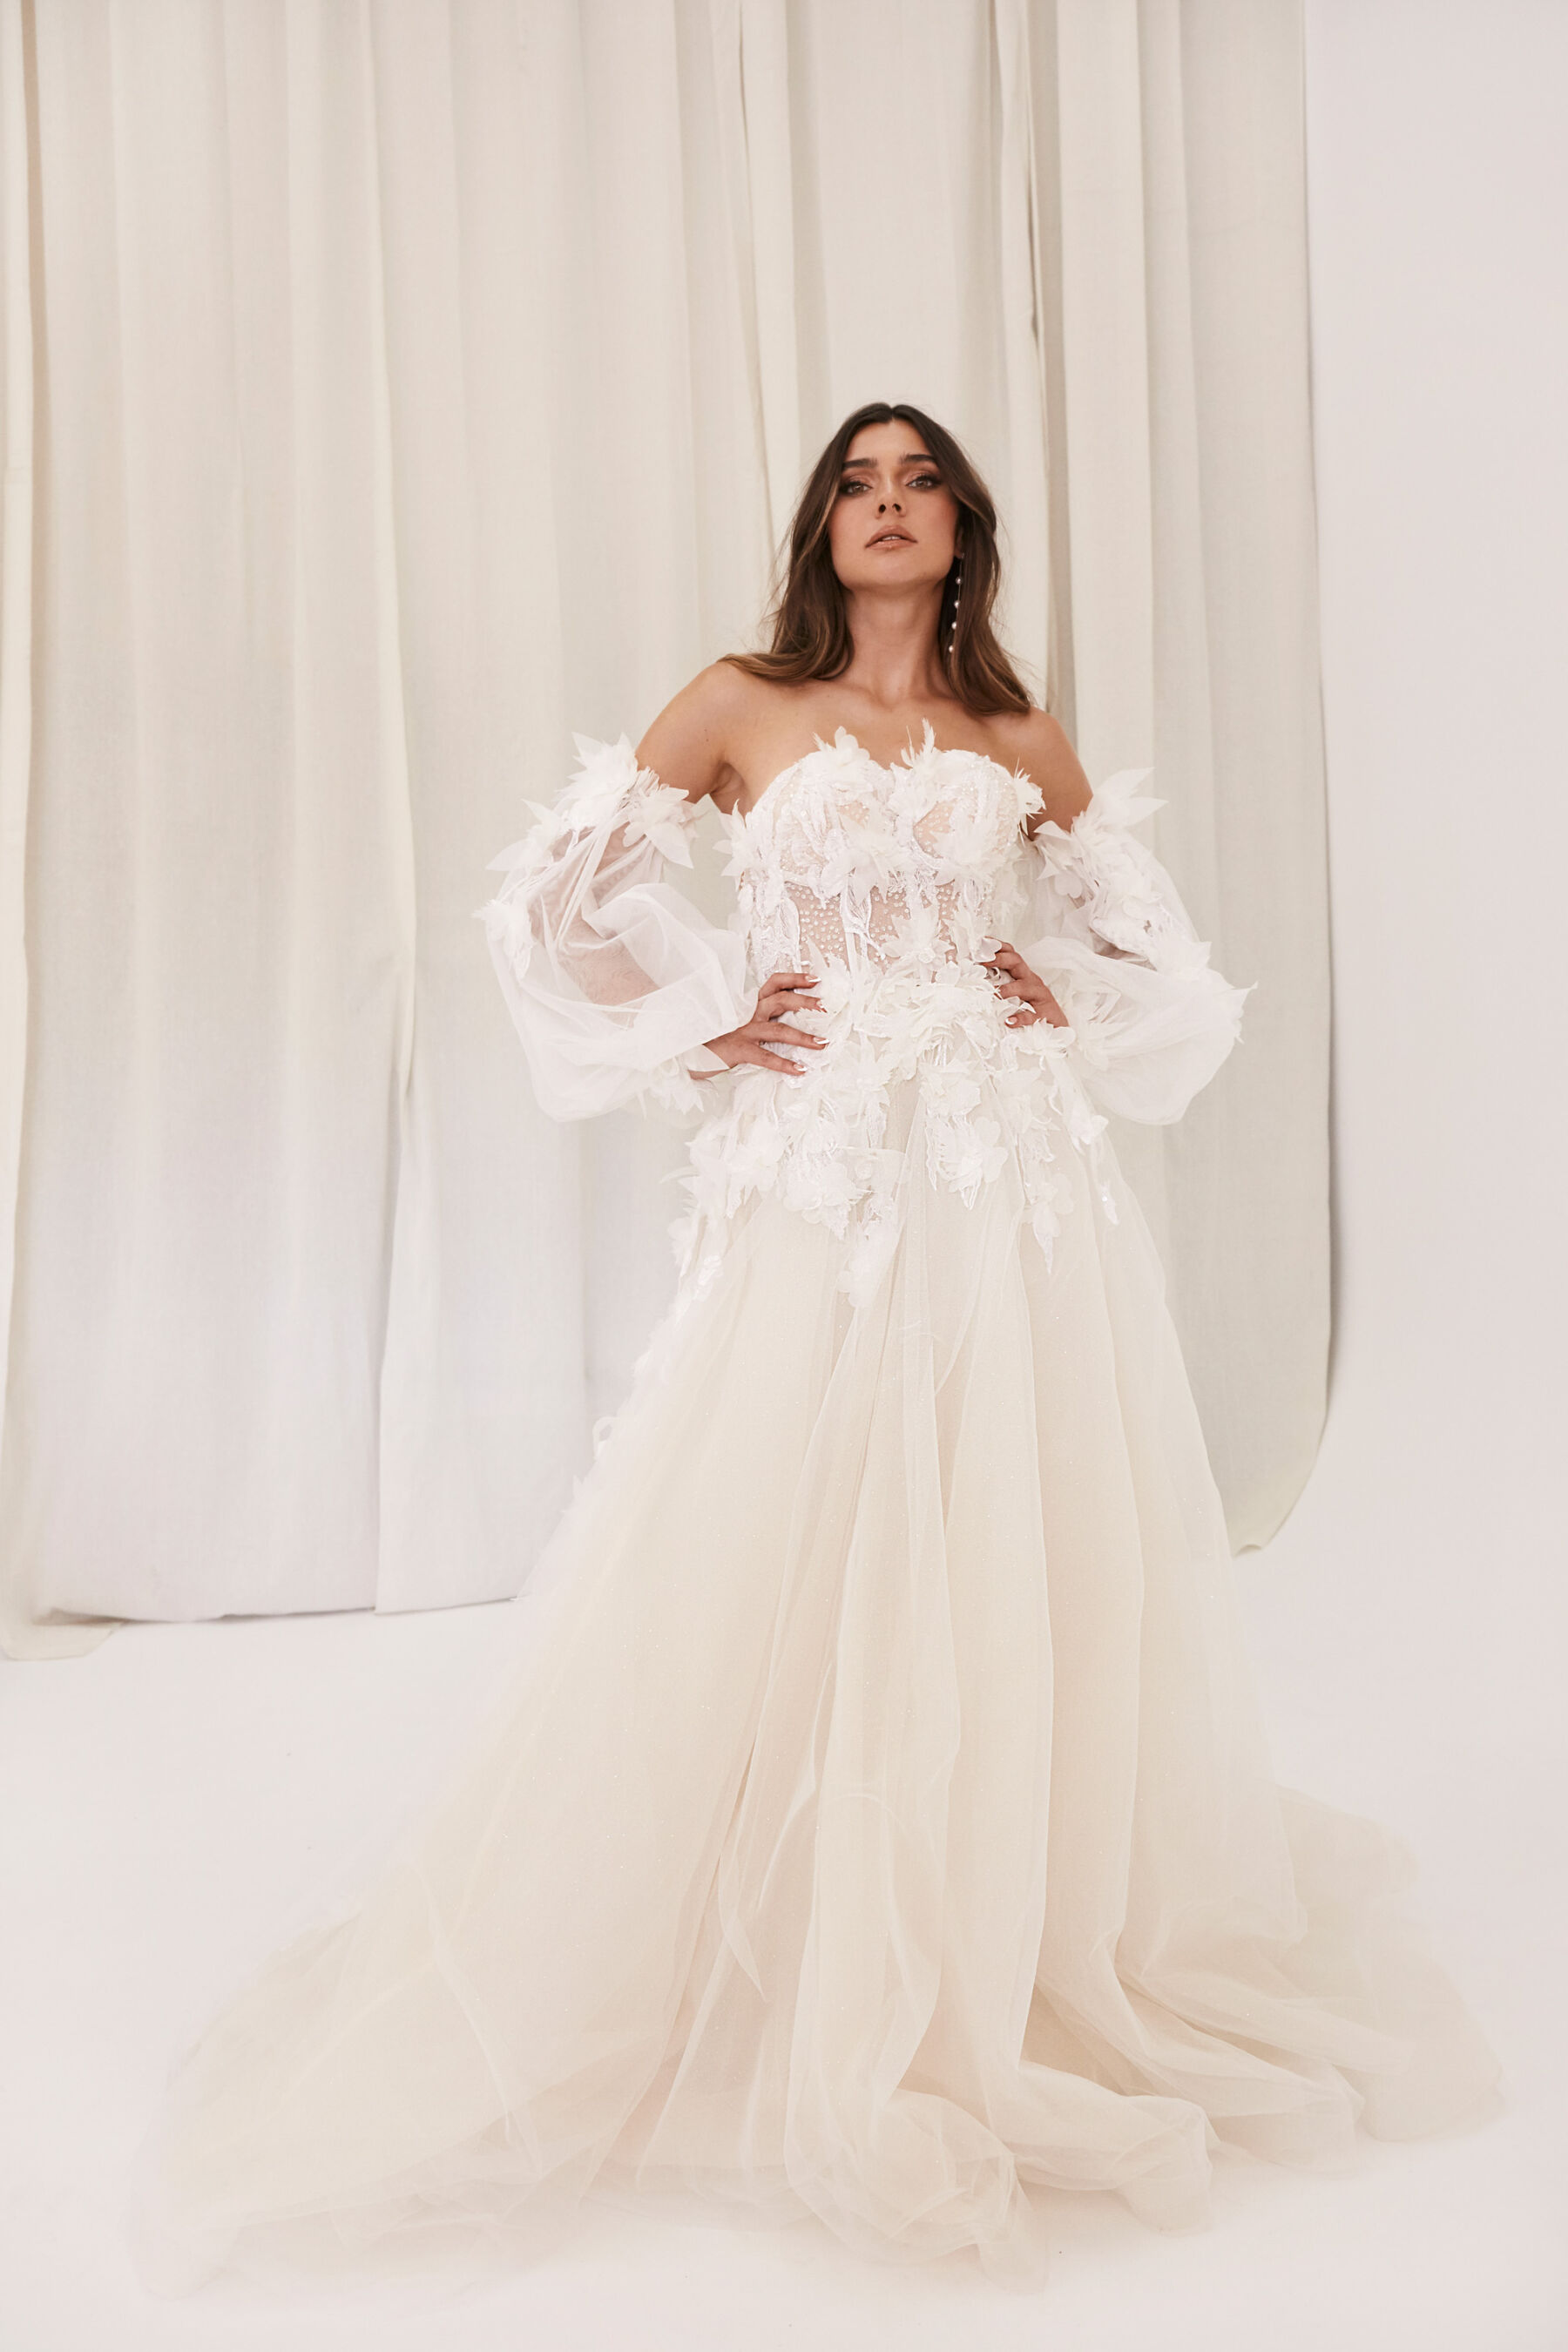 Sarah Alouache Wedding Dress